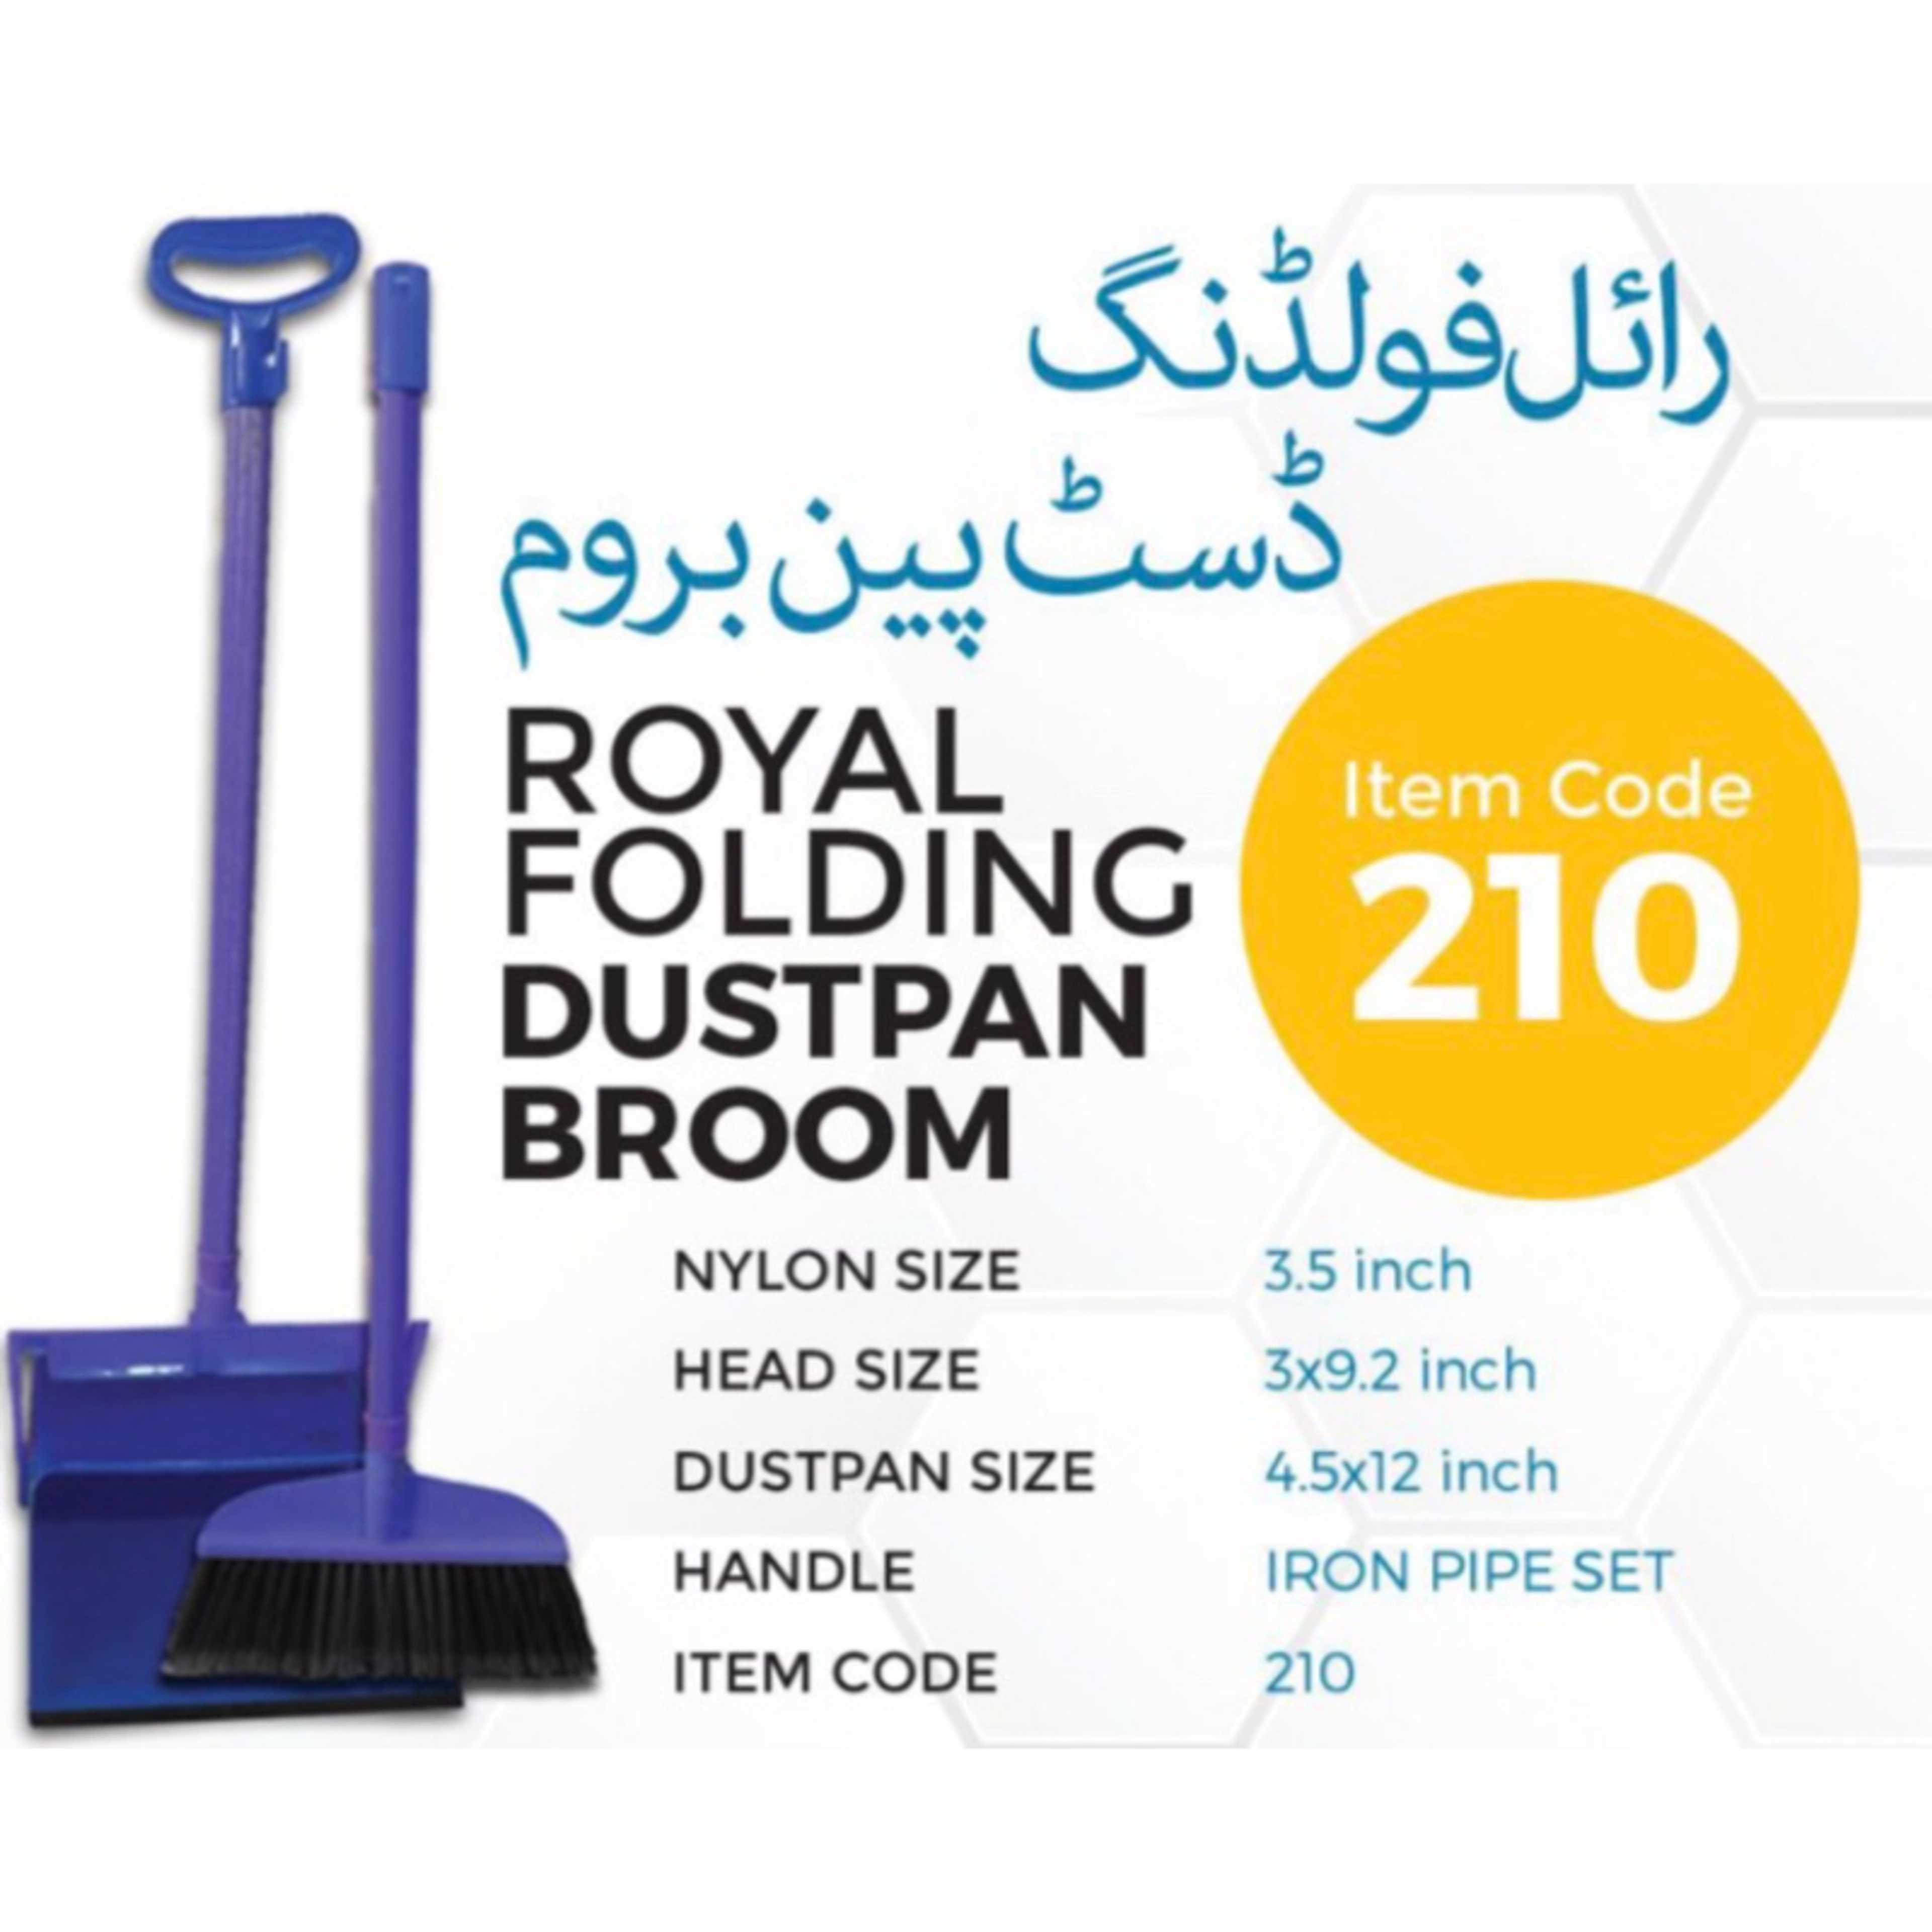 Royal Folding Dustpan Broom